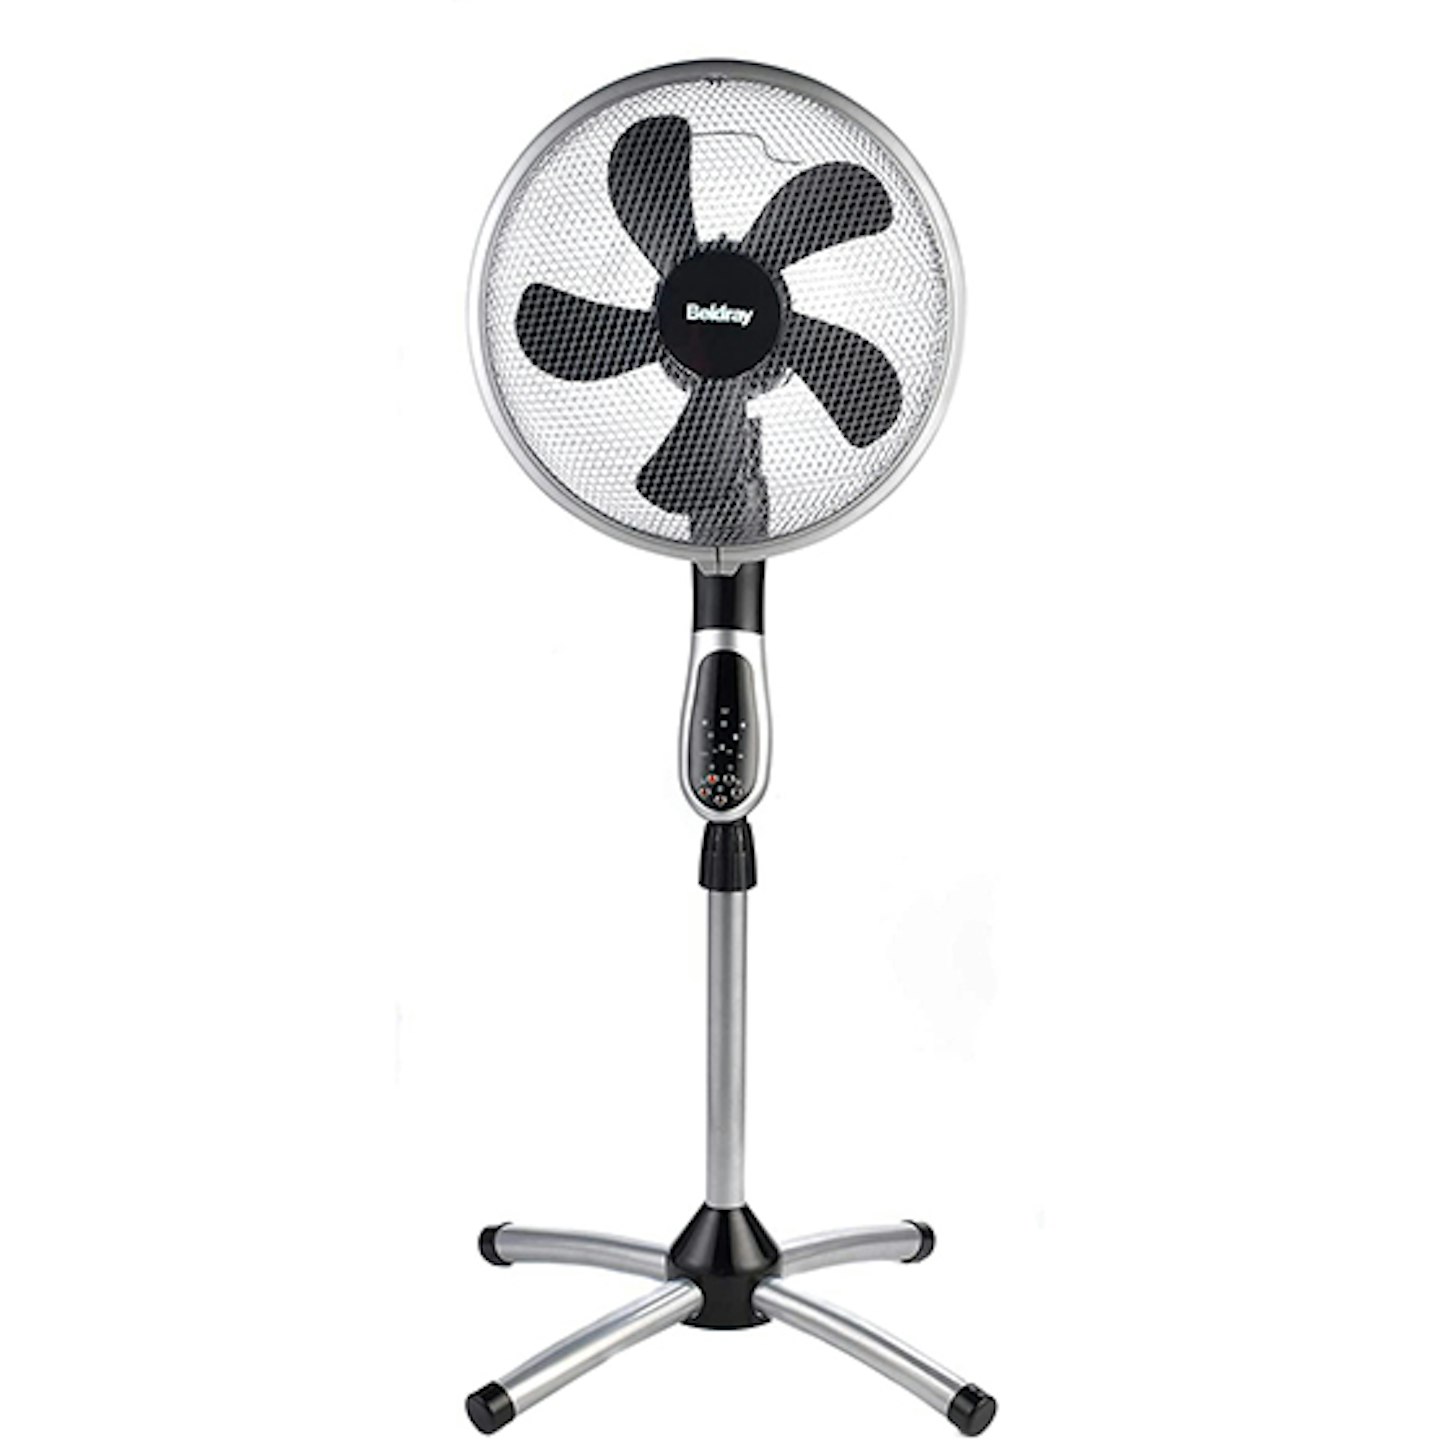 Beldray EH1331 Premium 360 degree Oscillating Pedestal Fan with Remote Control